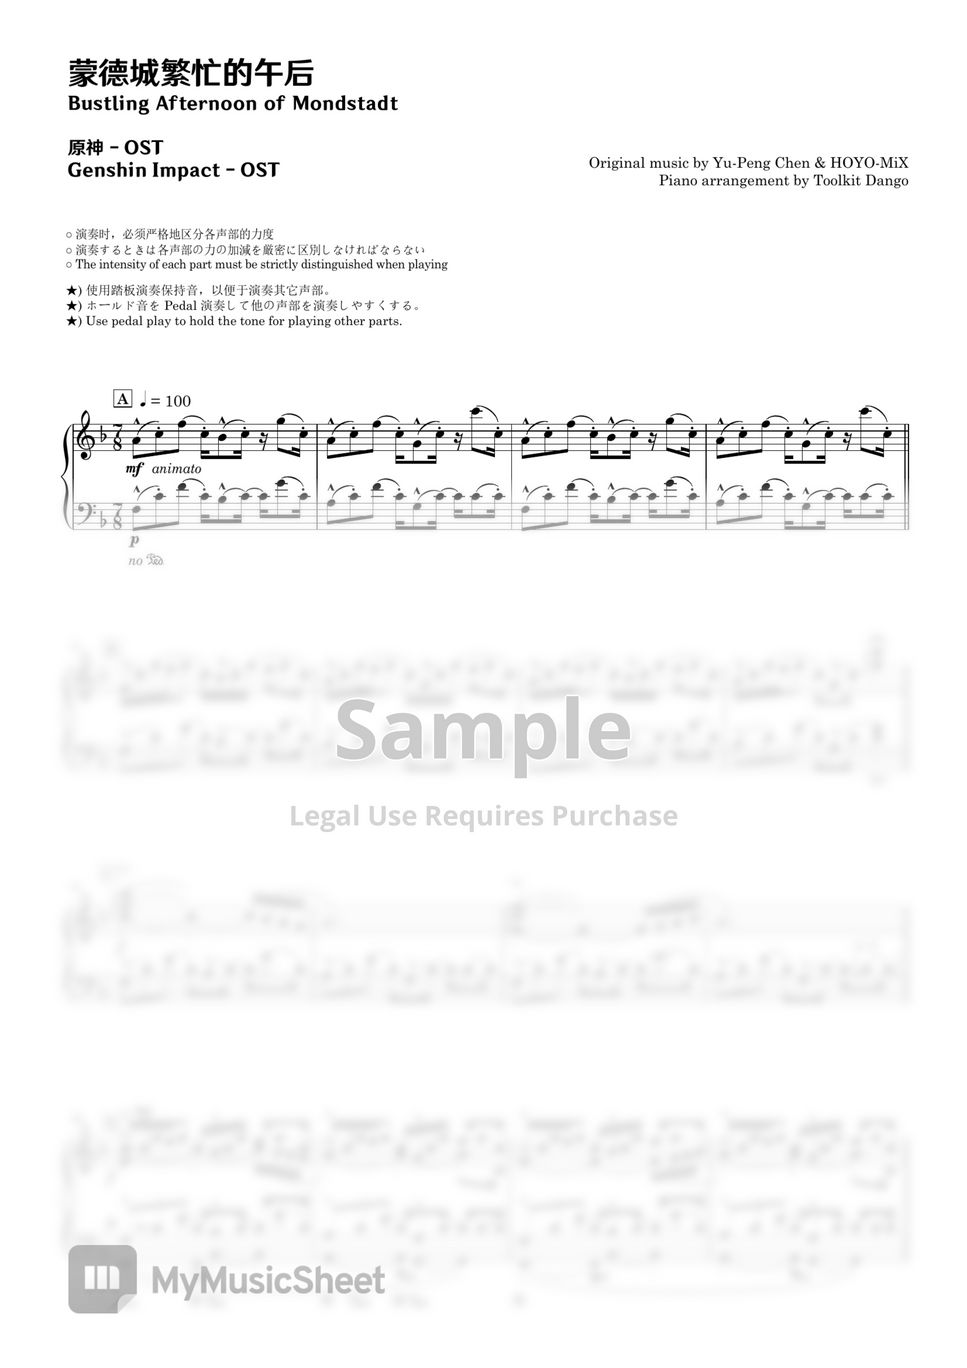 Genshin Impact - Bustling Afternoon of Mondstadt (Piano Version, Original artists: Zhiyi Chen&HOYO-MiX) by Toolkit Dango